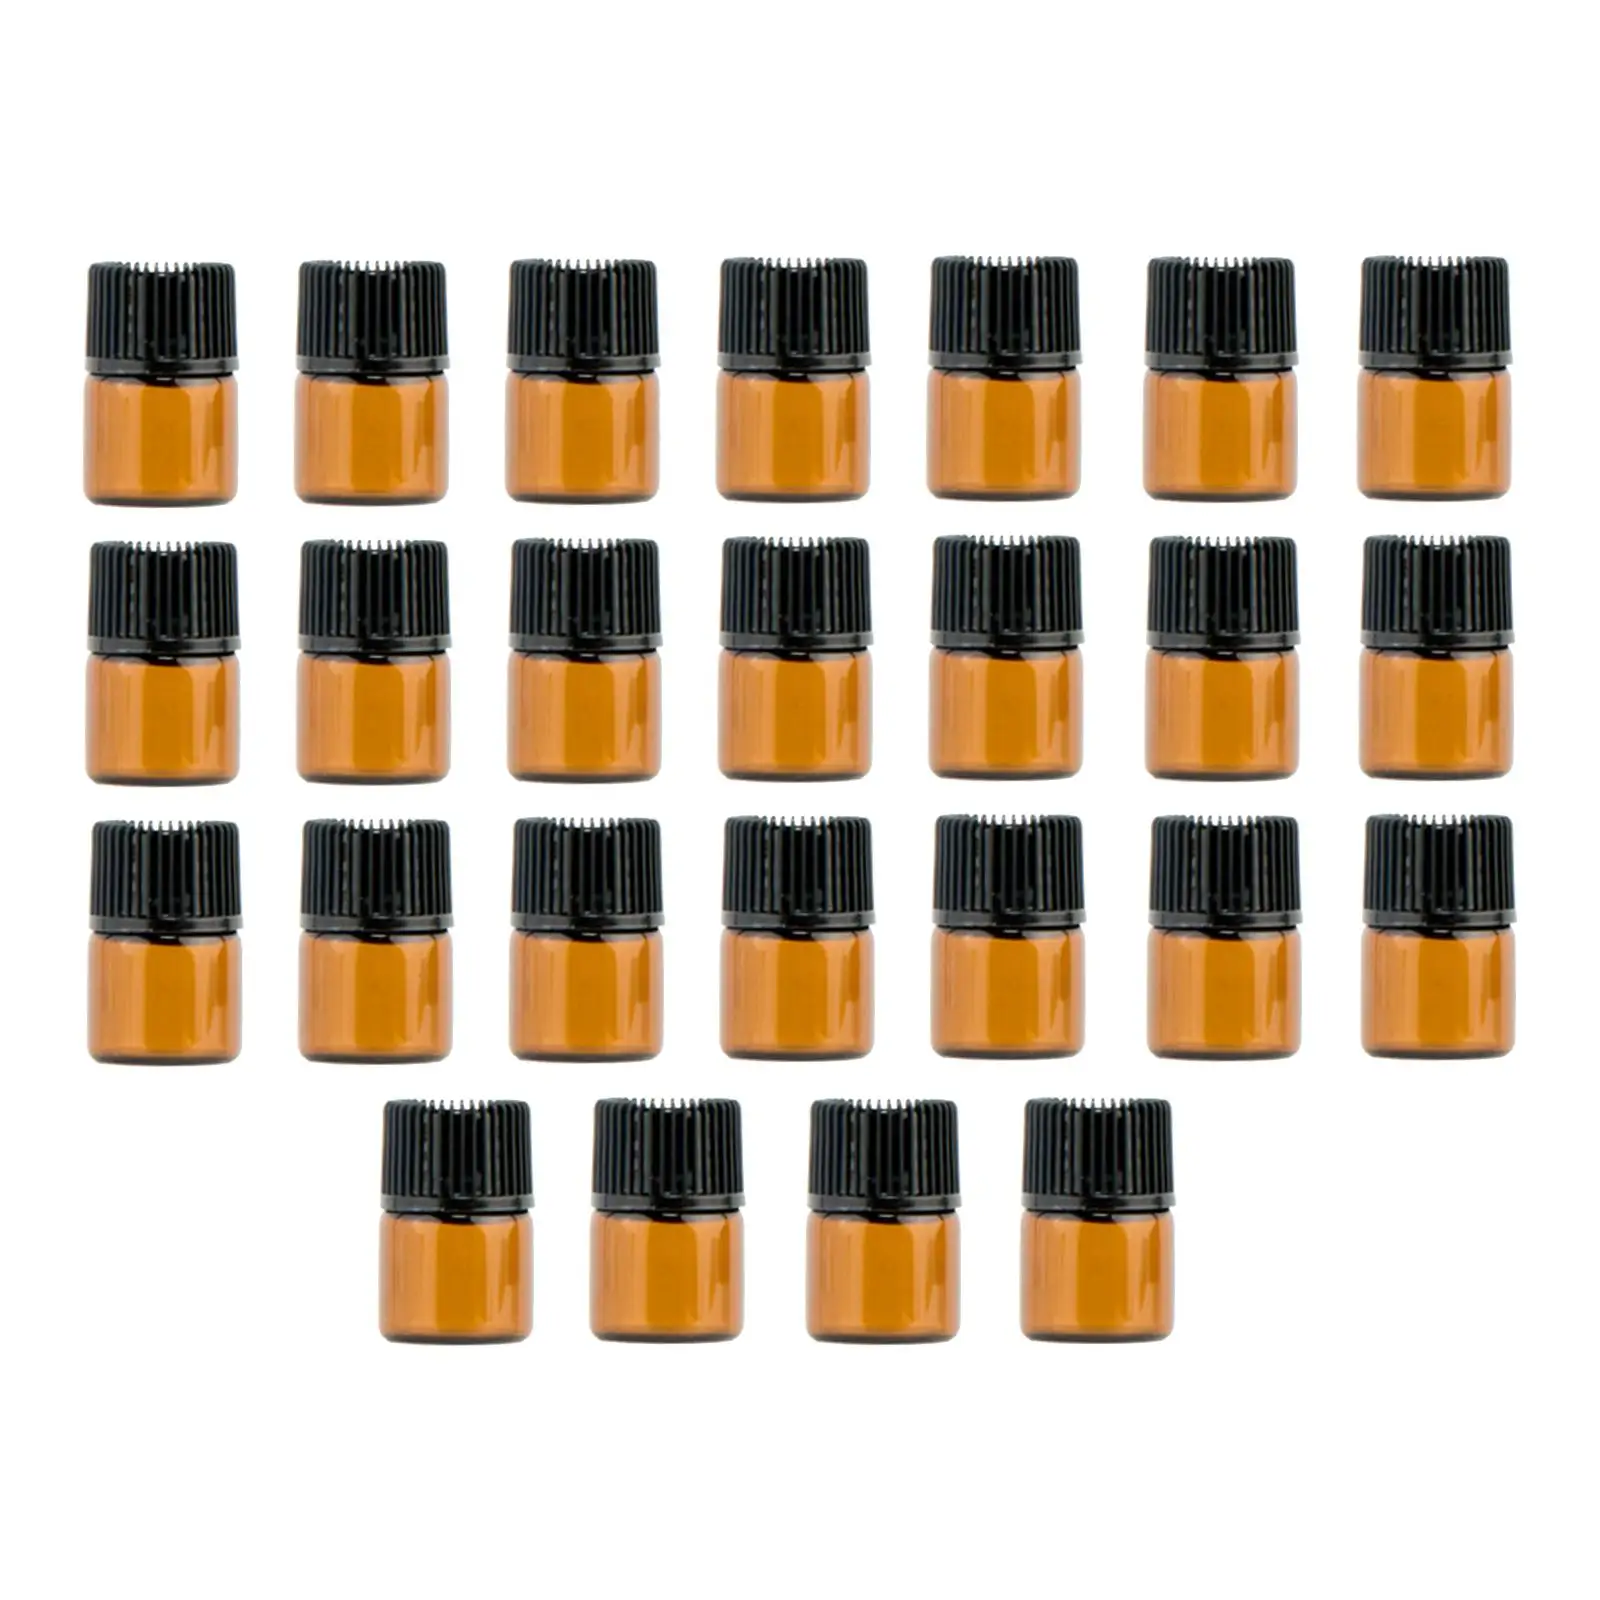 100 Pieces Bottles - ml 2ml 3ml Essential Oil Bottle with Orifice